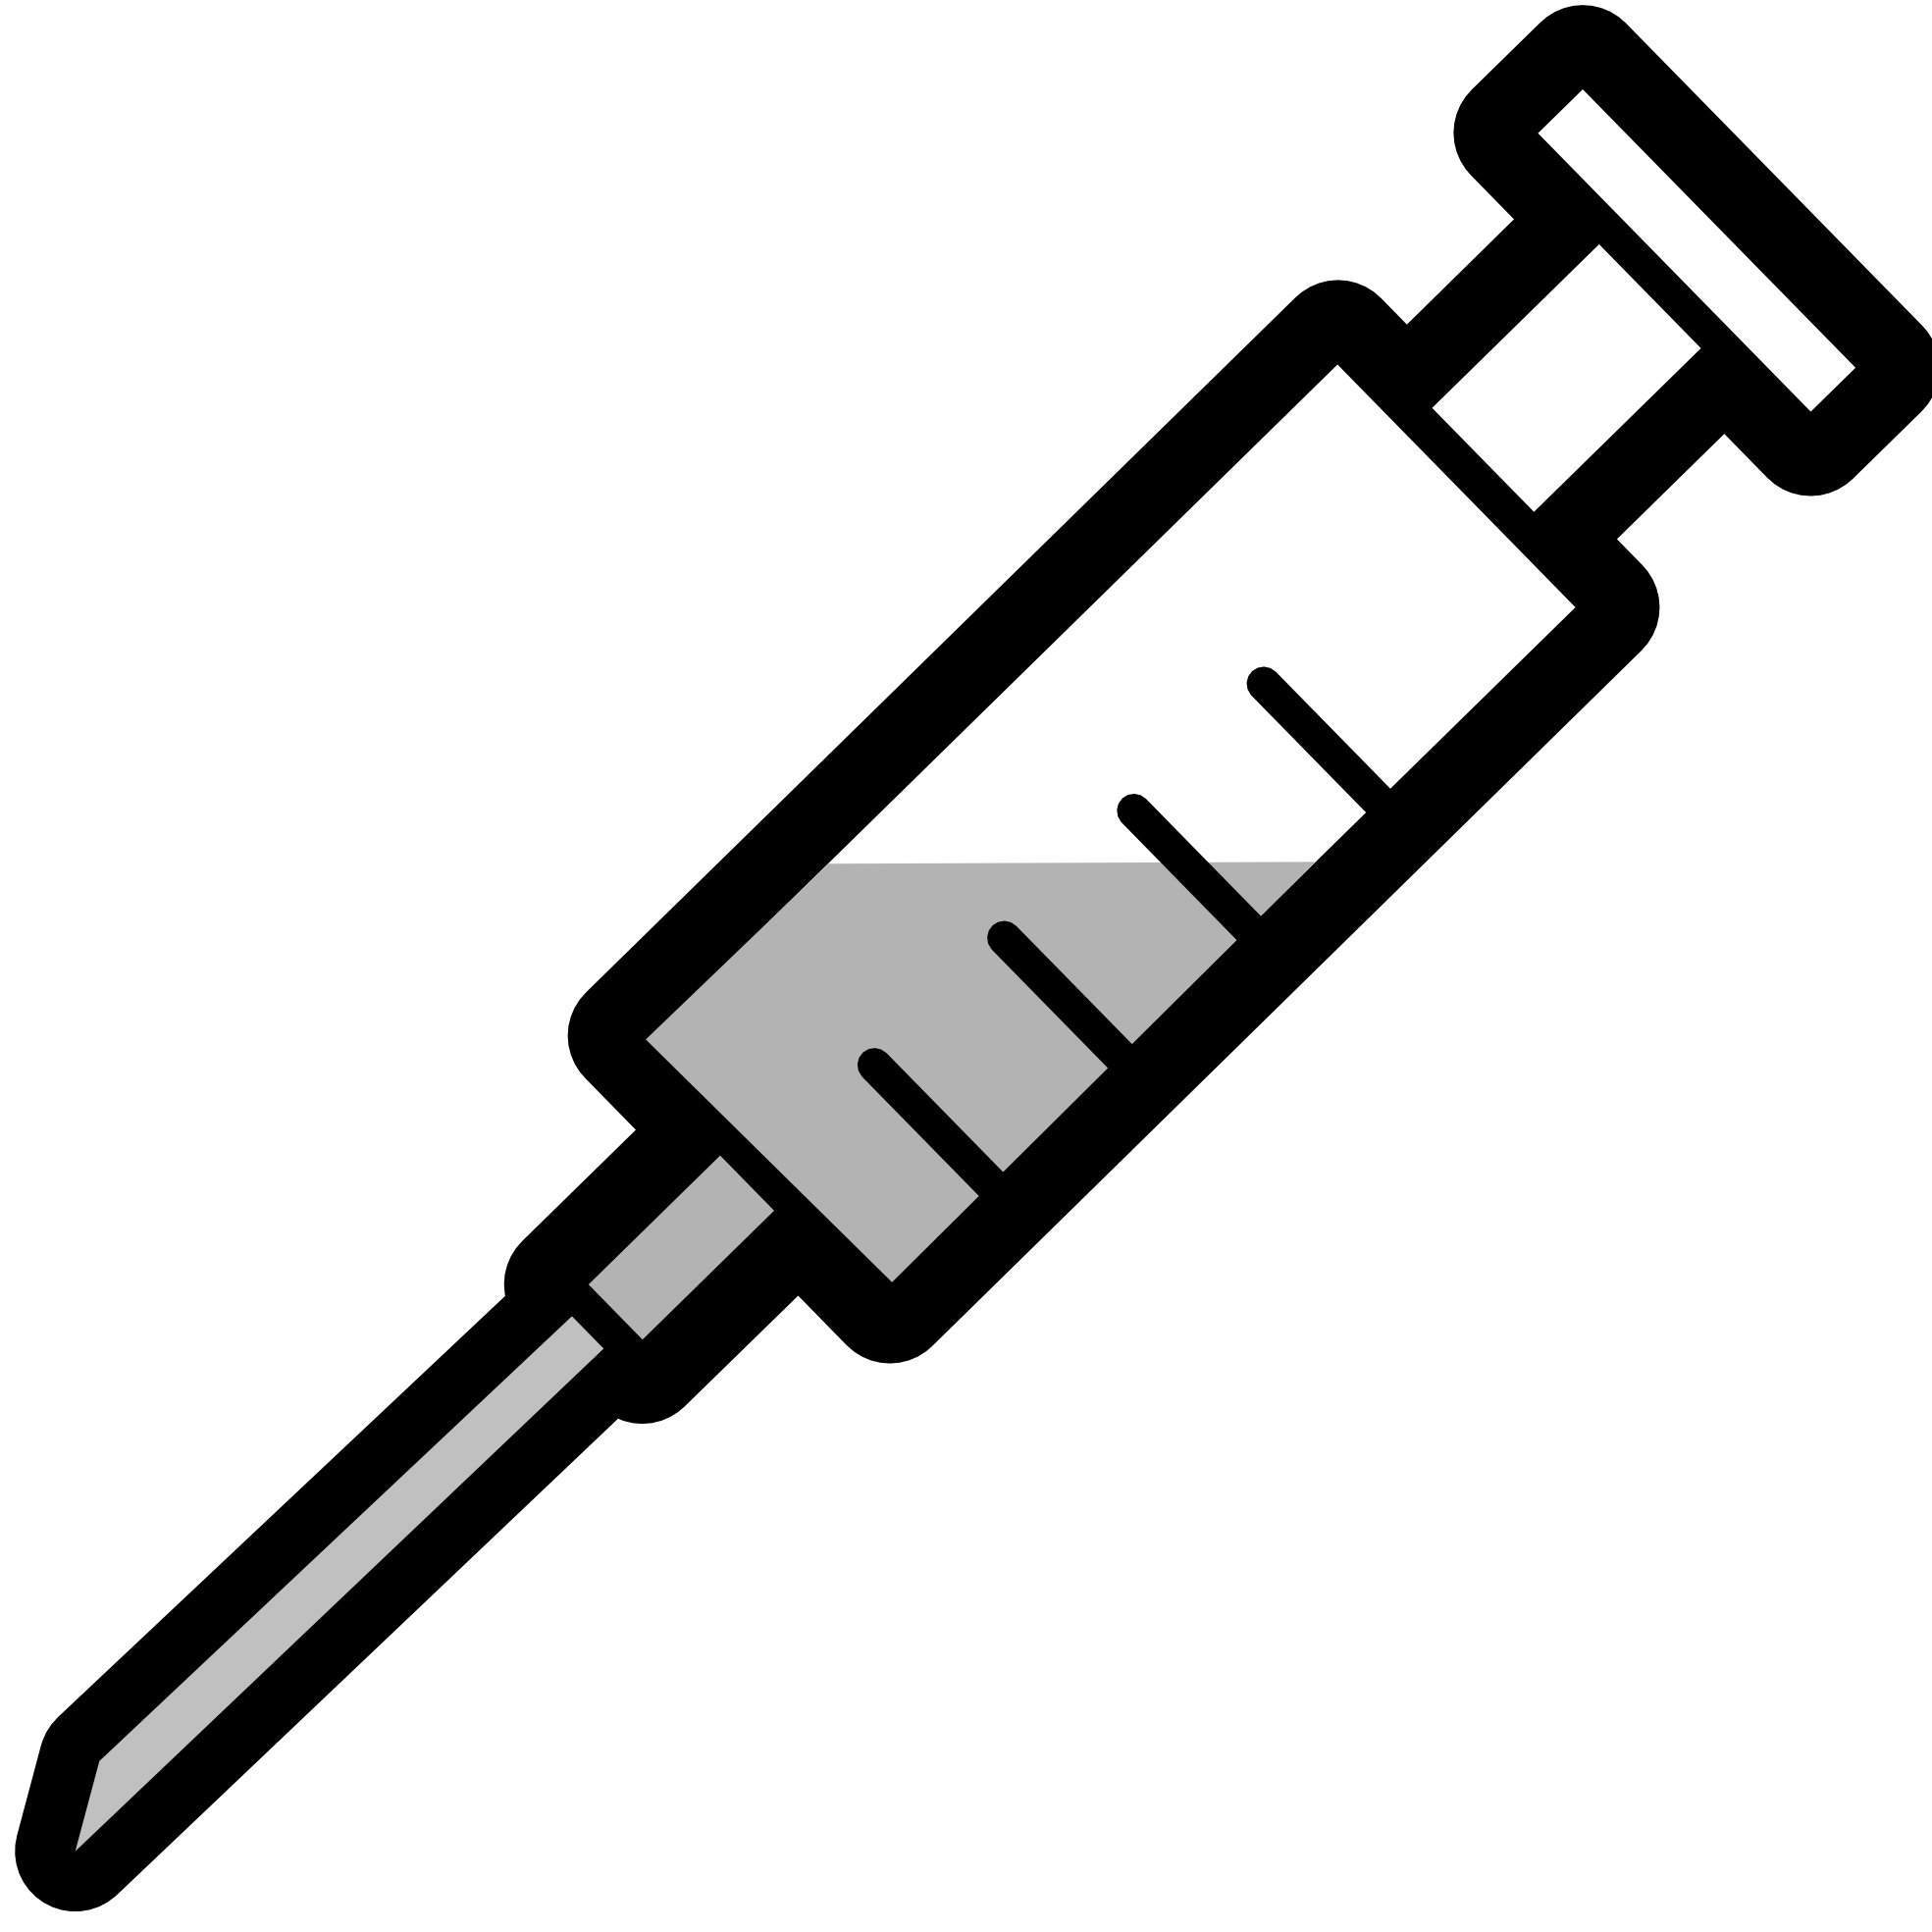 Red syringe